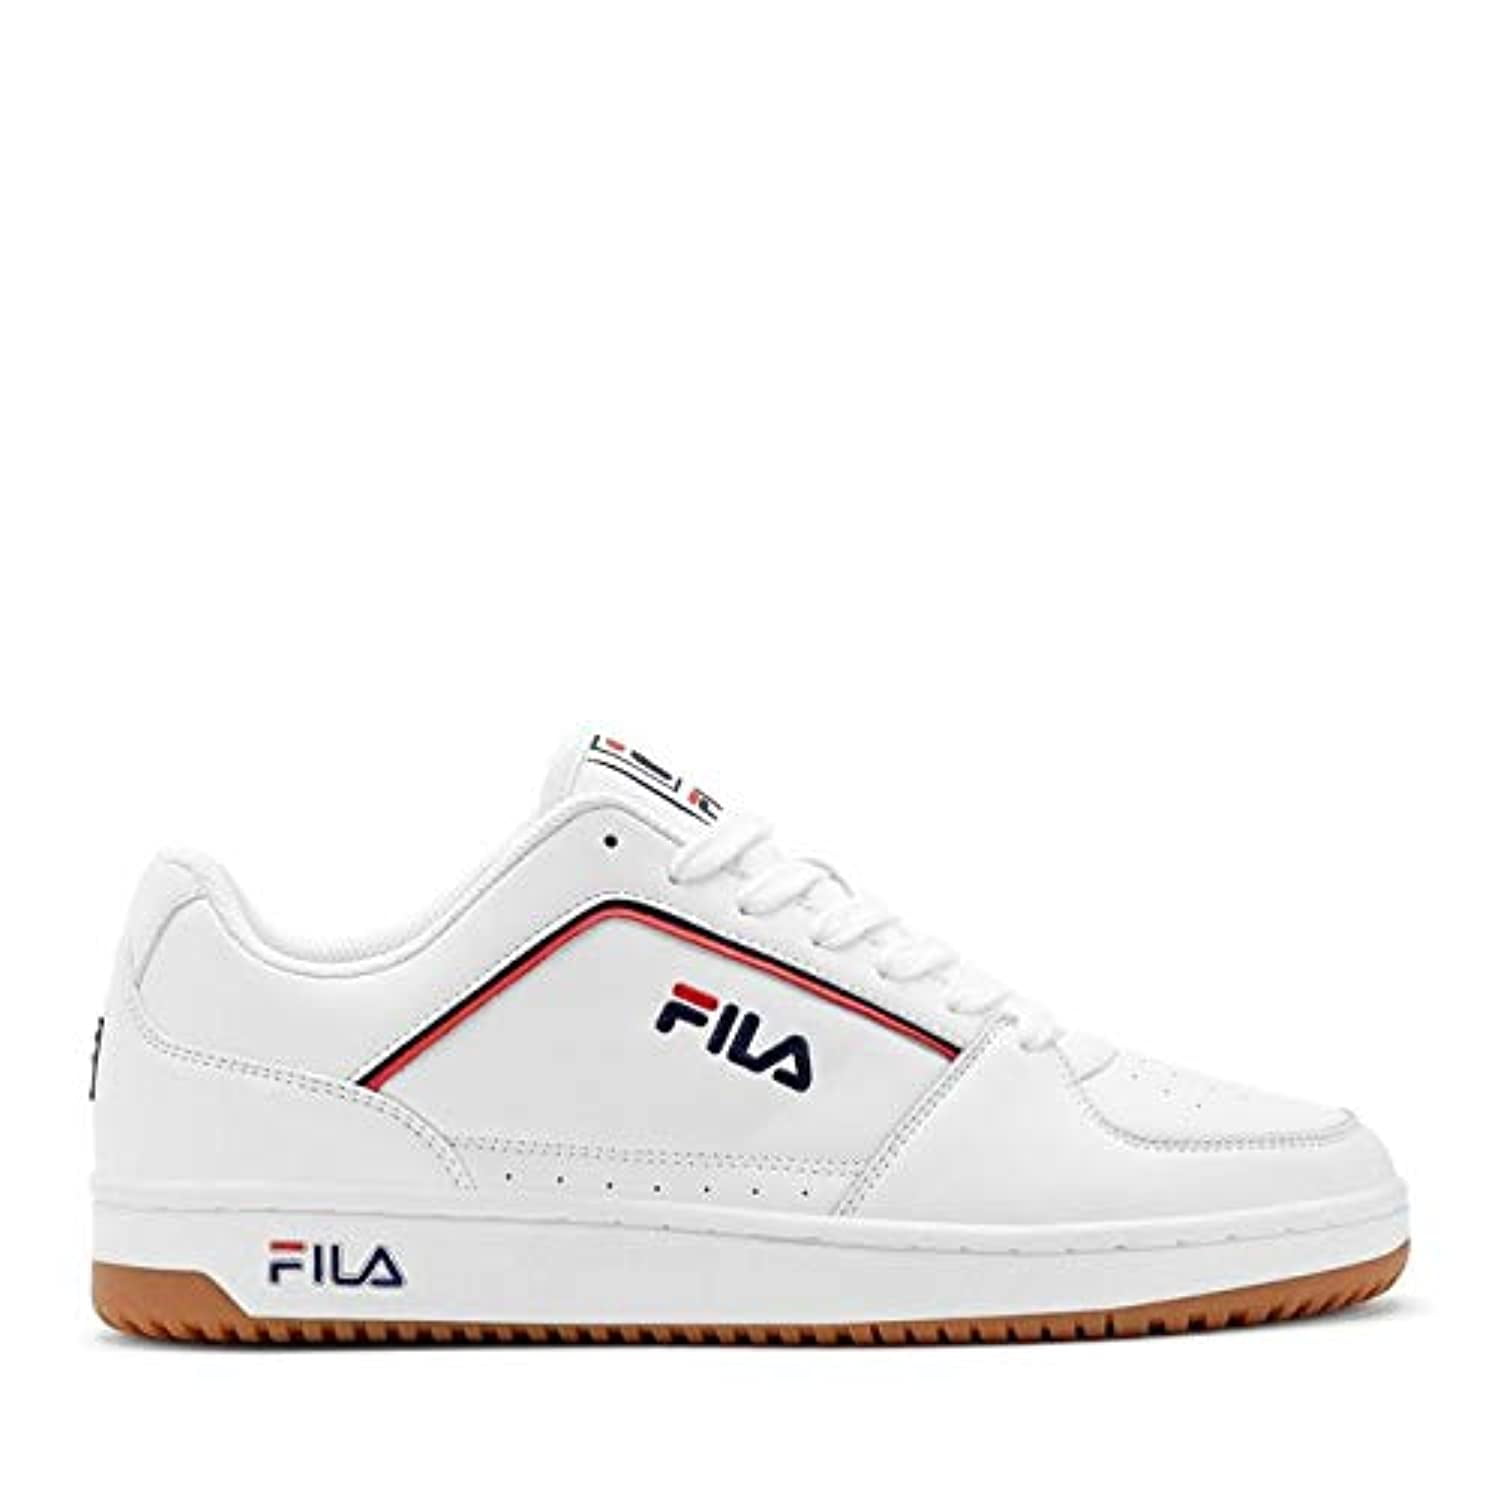 Fila Men's Eastpoint Shoes White/Navy/Red 9.5 - Walmart.com